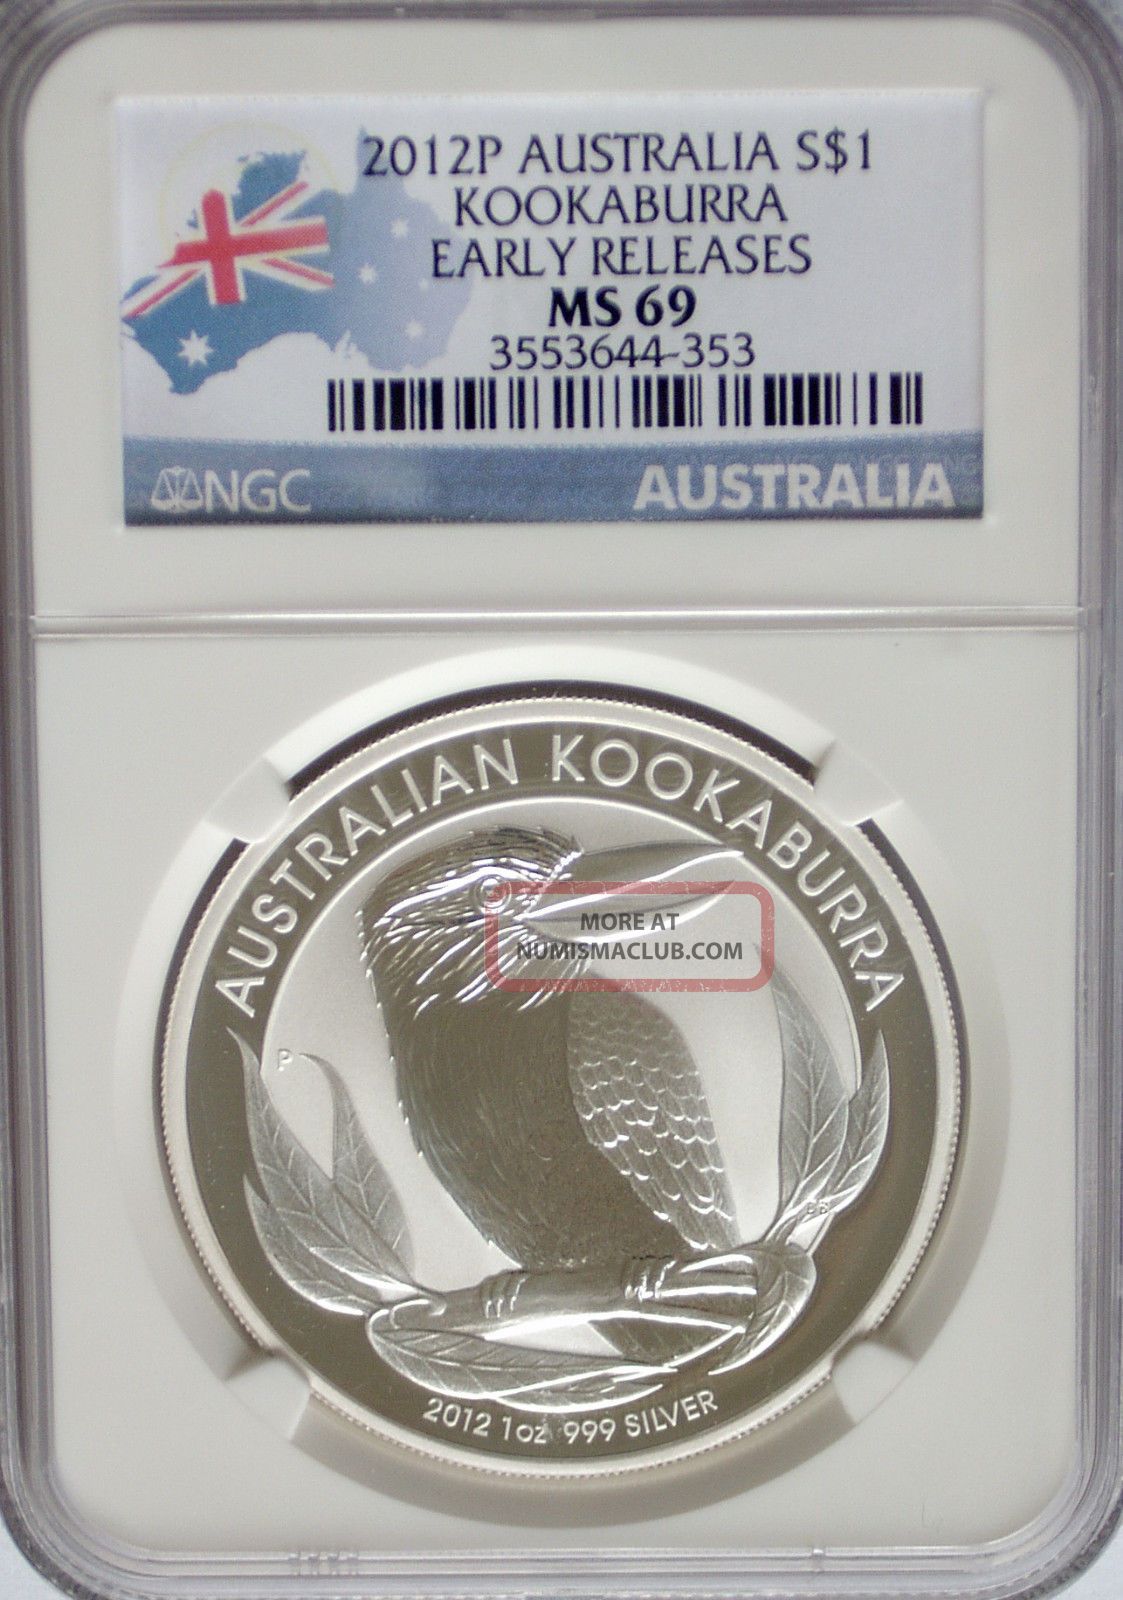 Ngc 2012 P Australia Kookaburra $1 Ms69 Early Releases Silver 1oz 999 Perth Australia photo